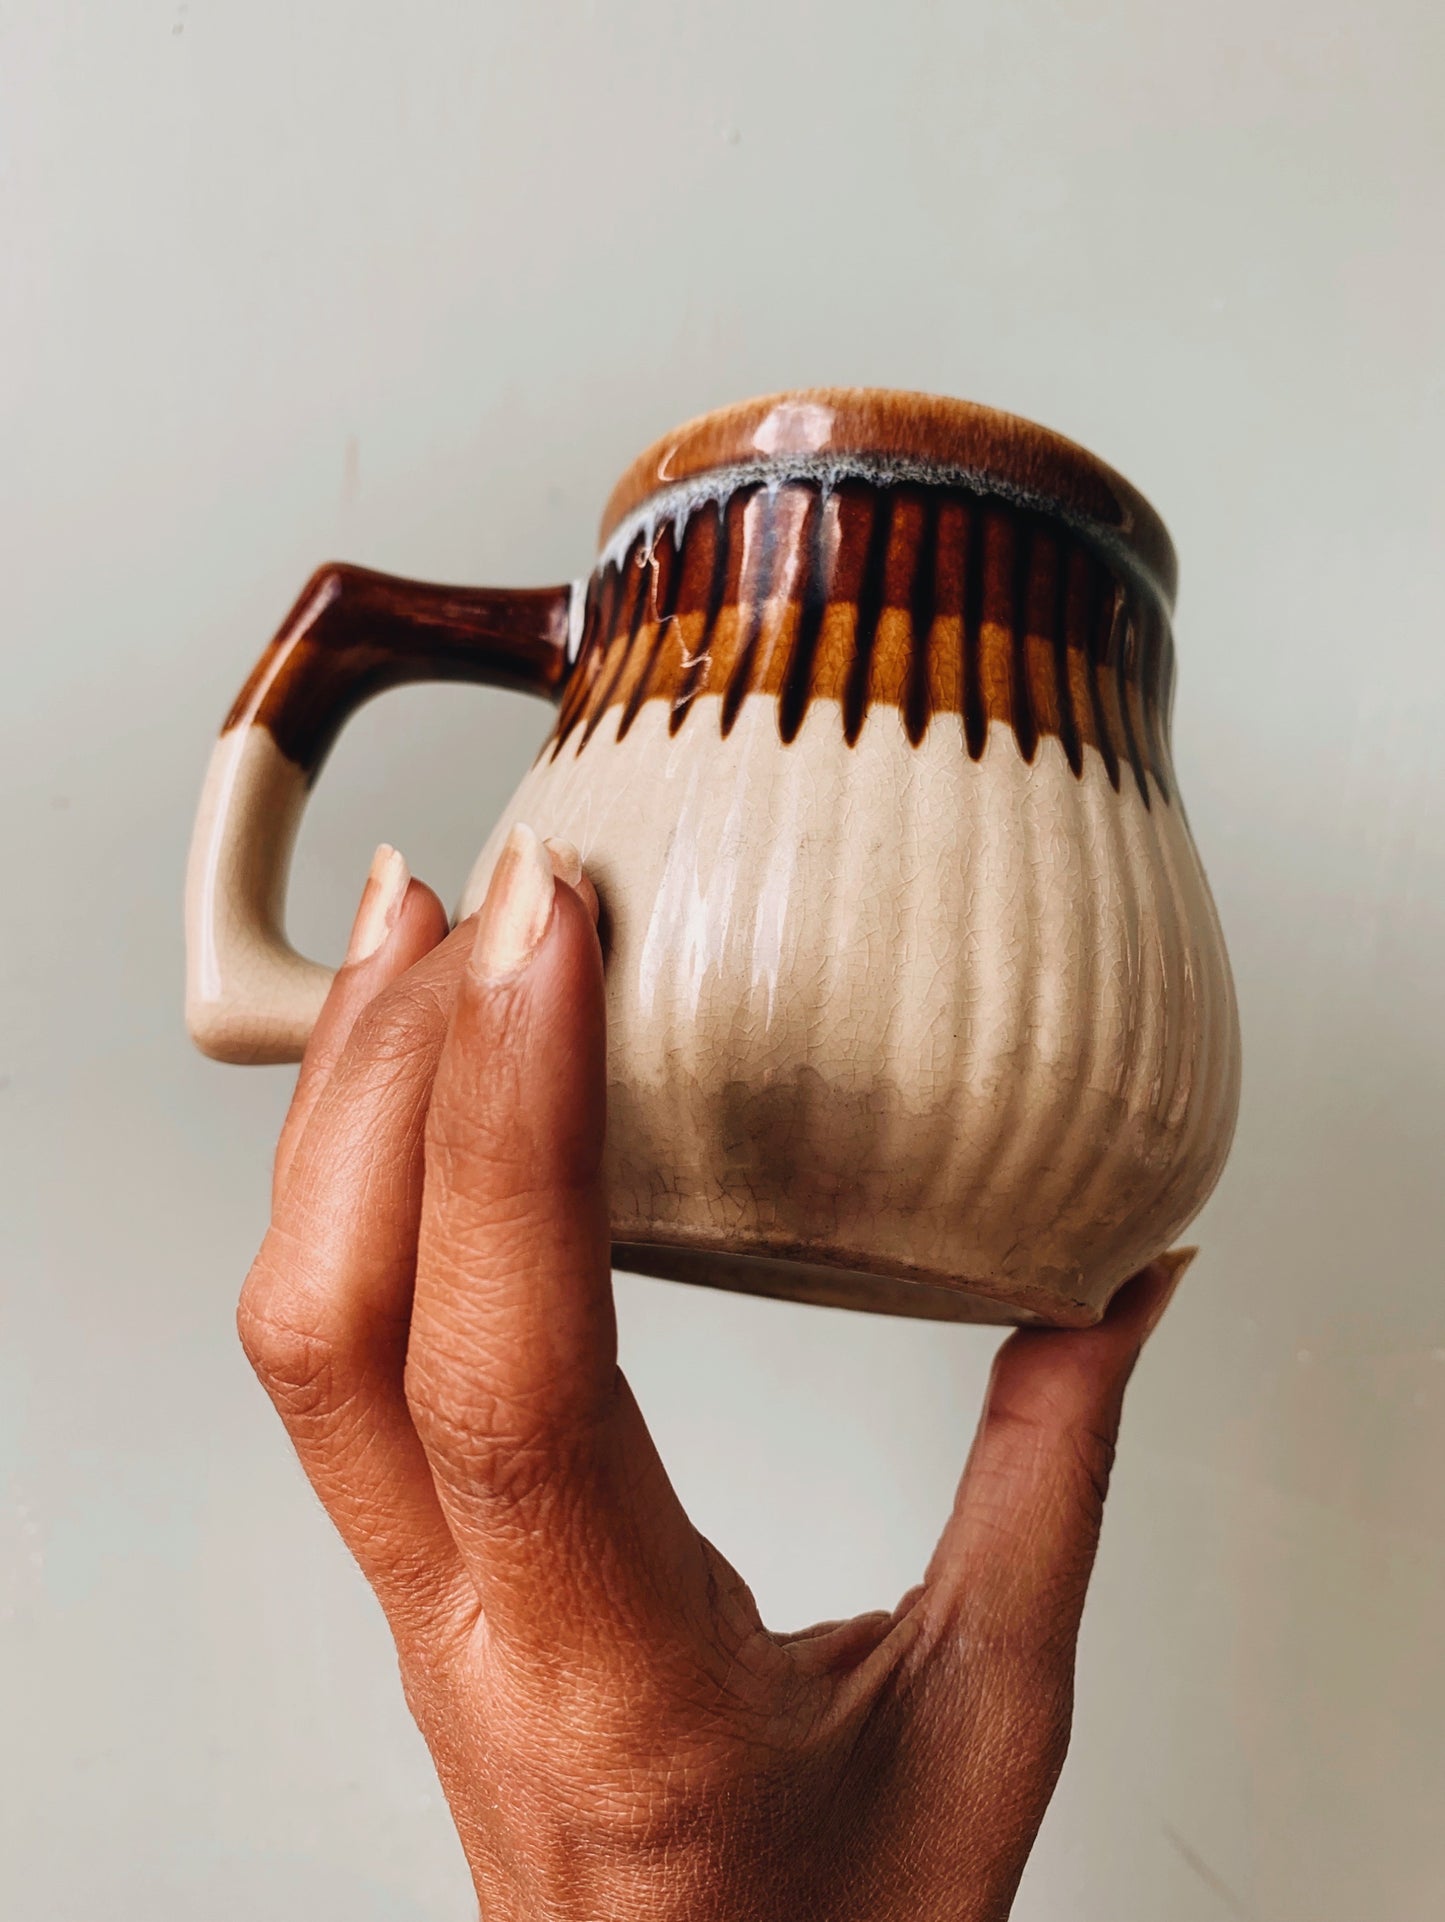 Vintage Rustic Hand Thrown Ceramic Crazed Mug